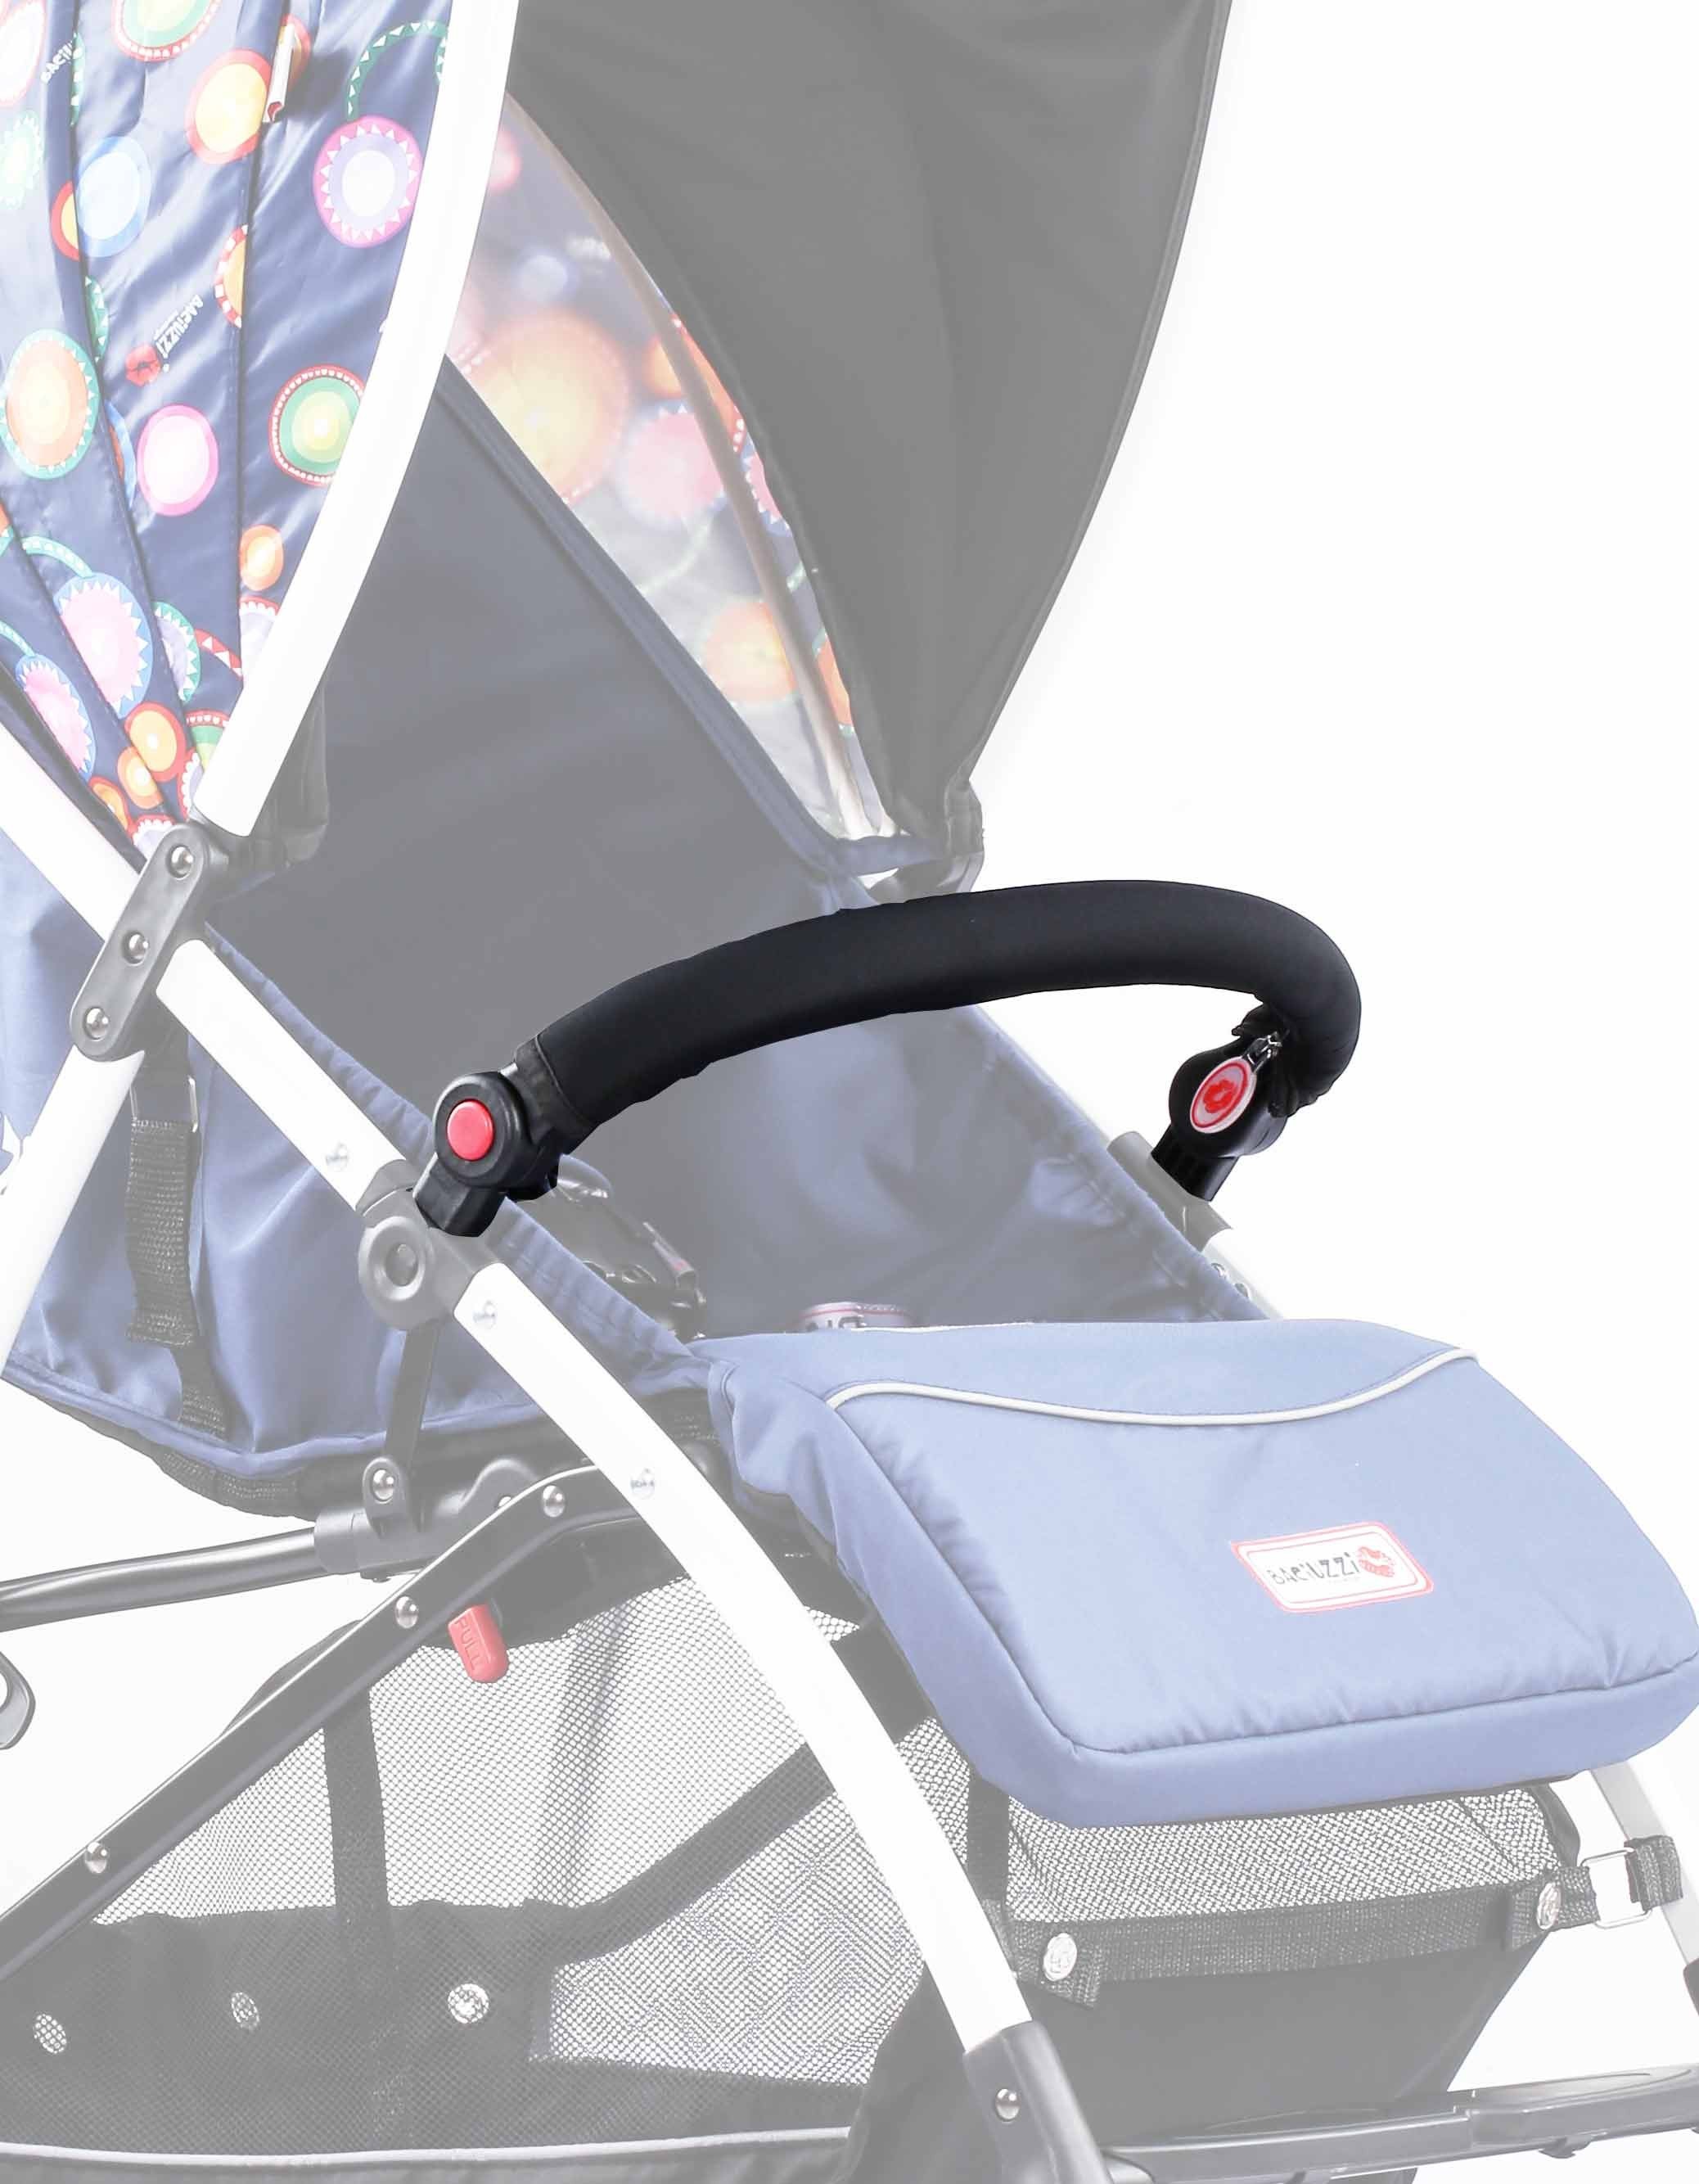 123 baby stroller